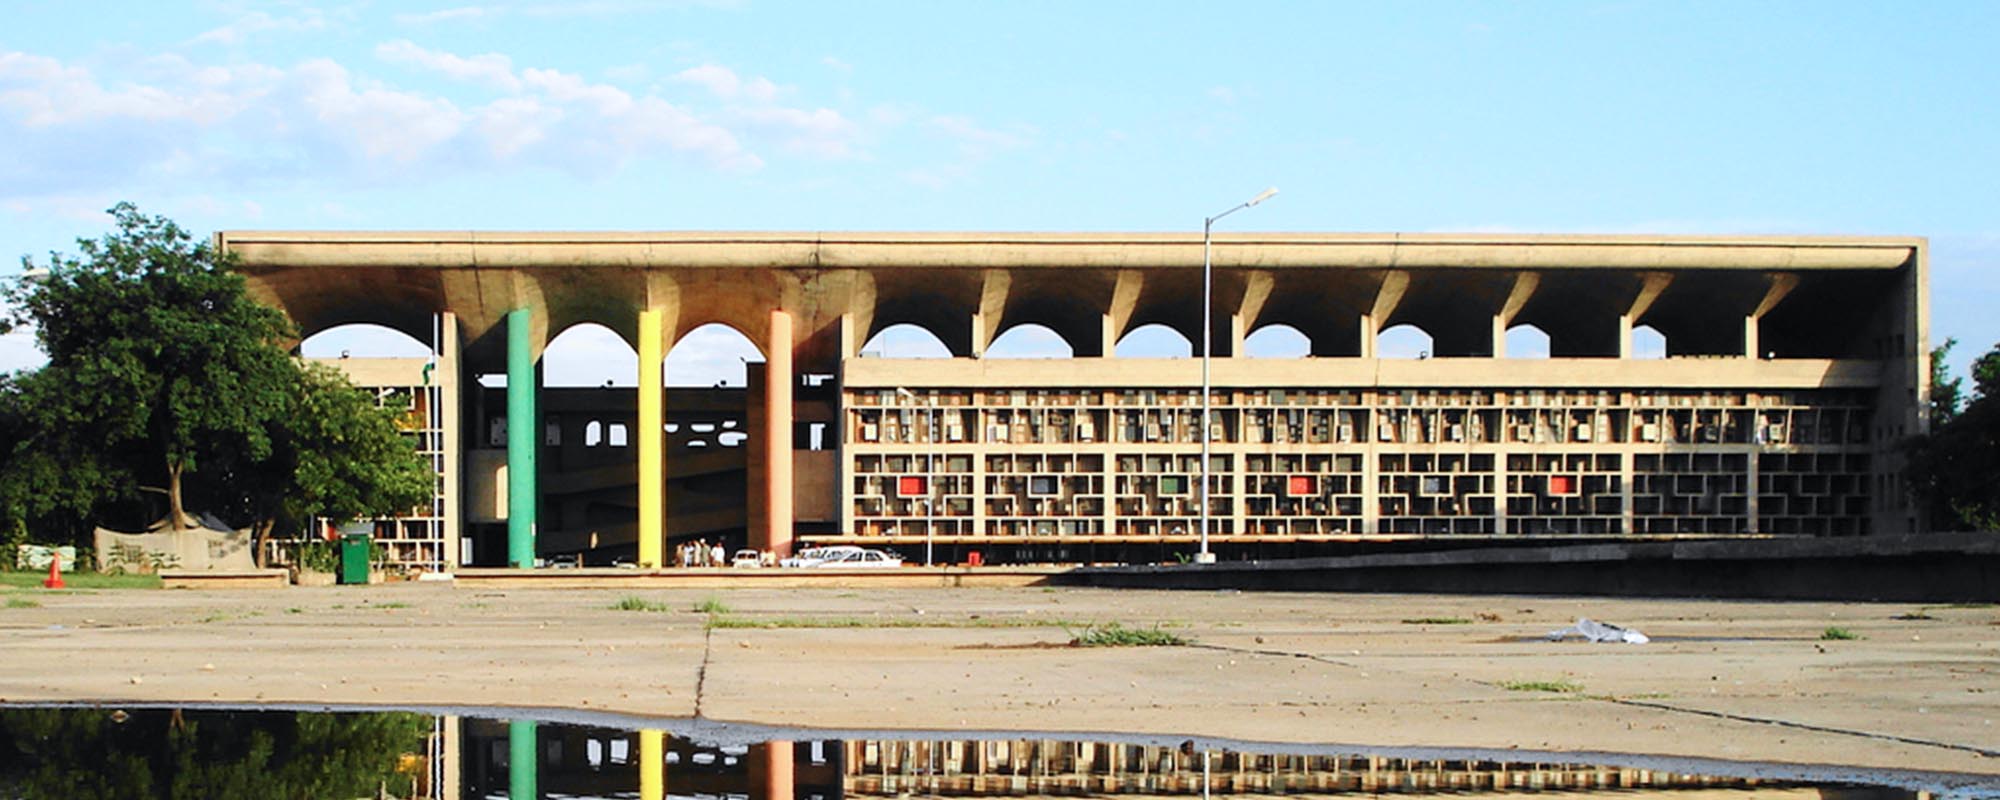 Le Corbusier's Capitol Complex becomes a UNESCO heritage site